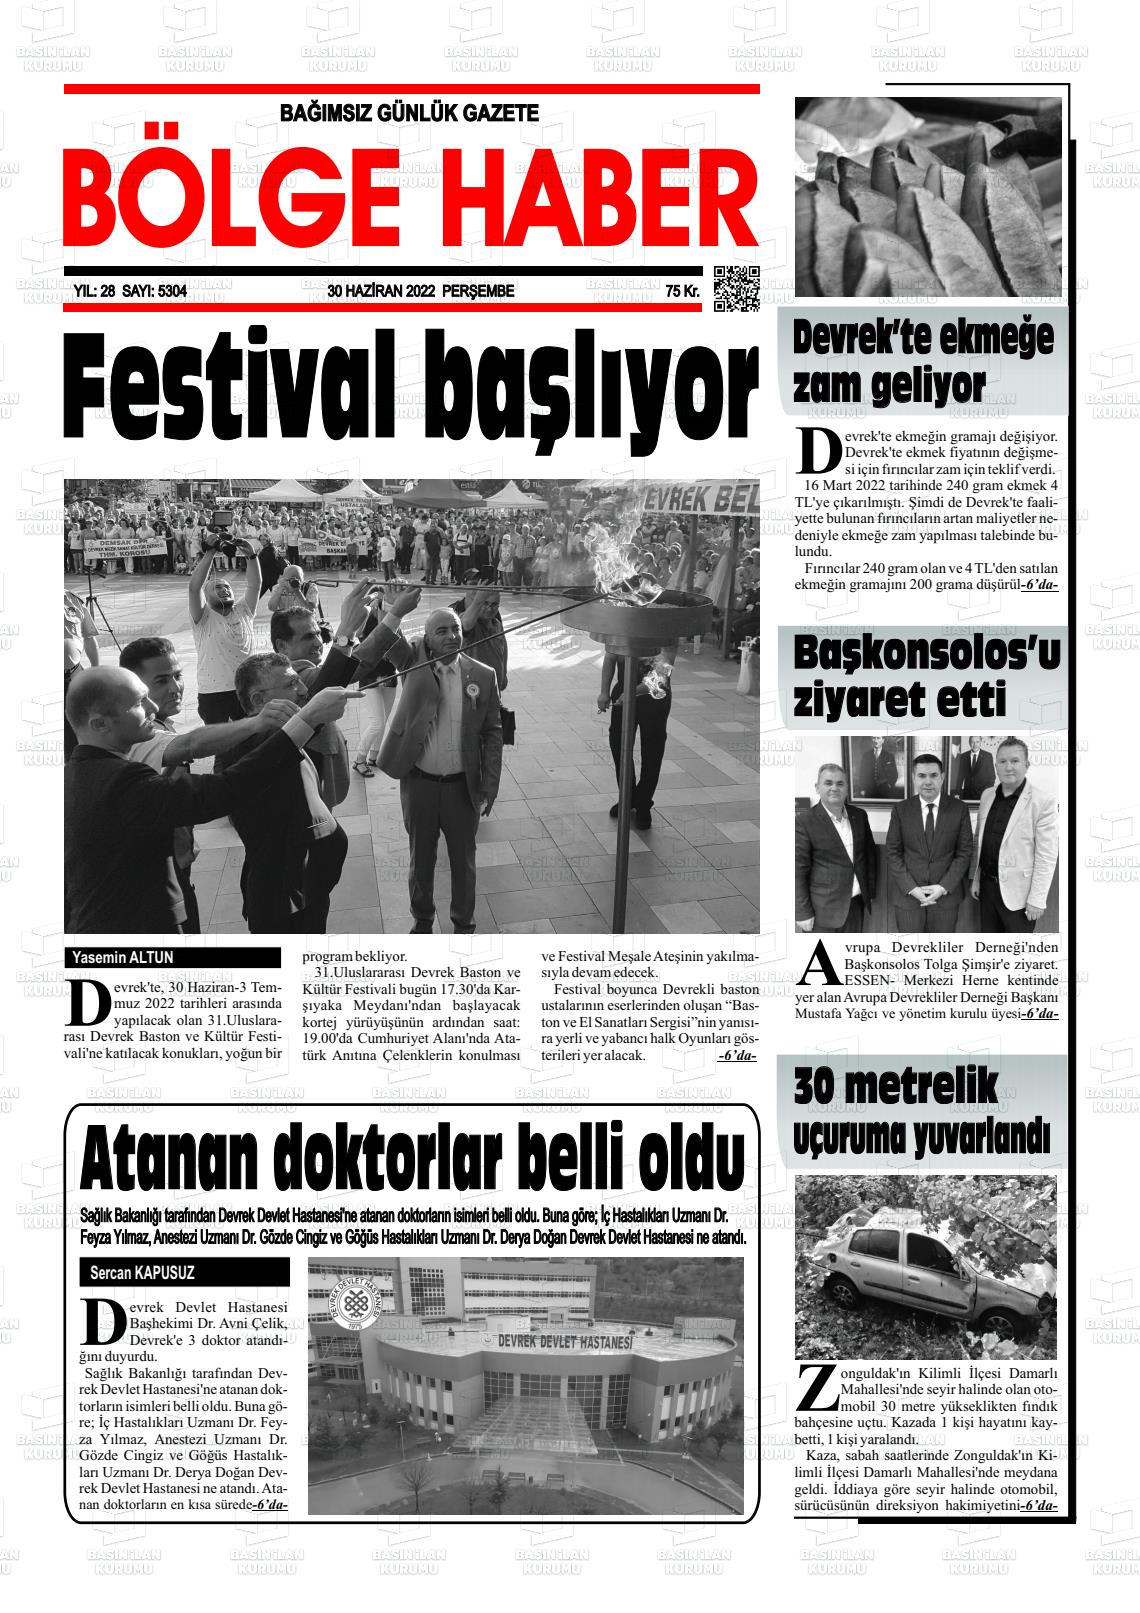 02 Temmuz 2022 Devrek Bölge Haber Gazete Manşeti